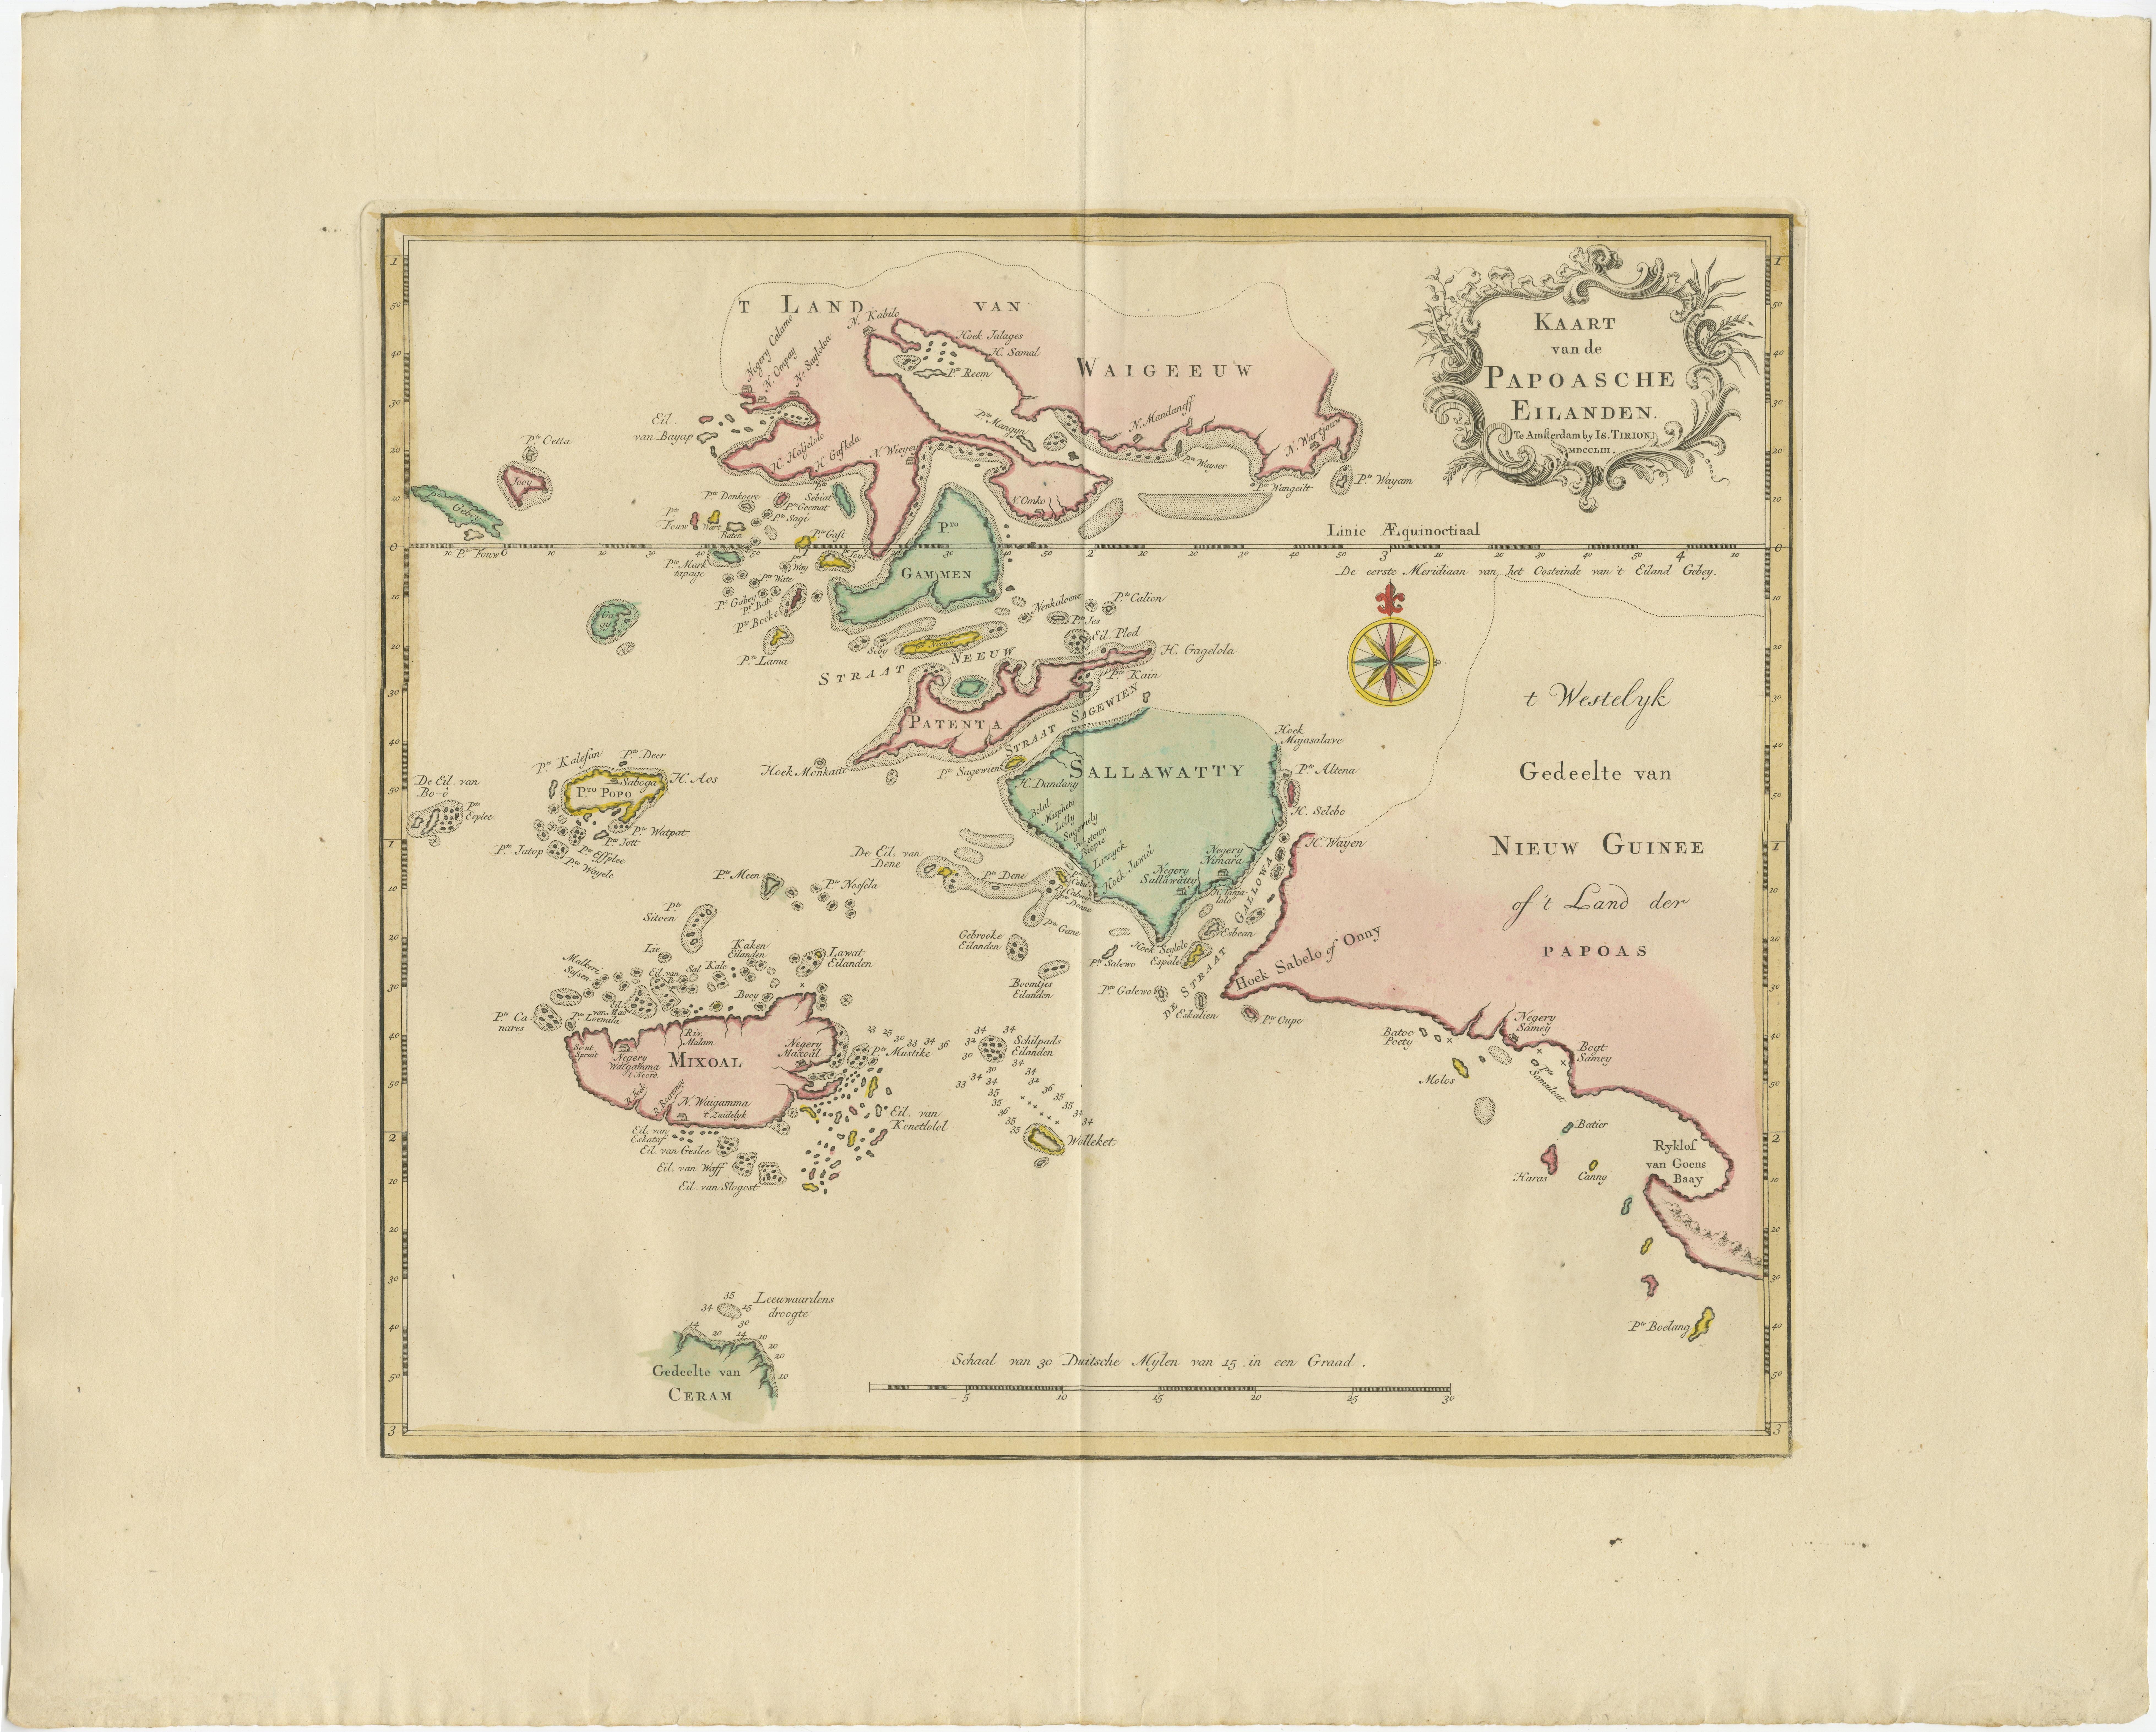 Antique map titled 'Kaart van de Papoasche Eilanden'. Beautiful original old map extending from the Spice Islands (Sallawatty, Patenta, Gammen, Land van Waigeeuw, Popo, Misool, and part of Seram) to the western end of Papua New Guinea. Many smaller